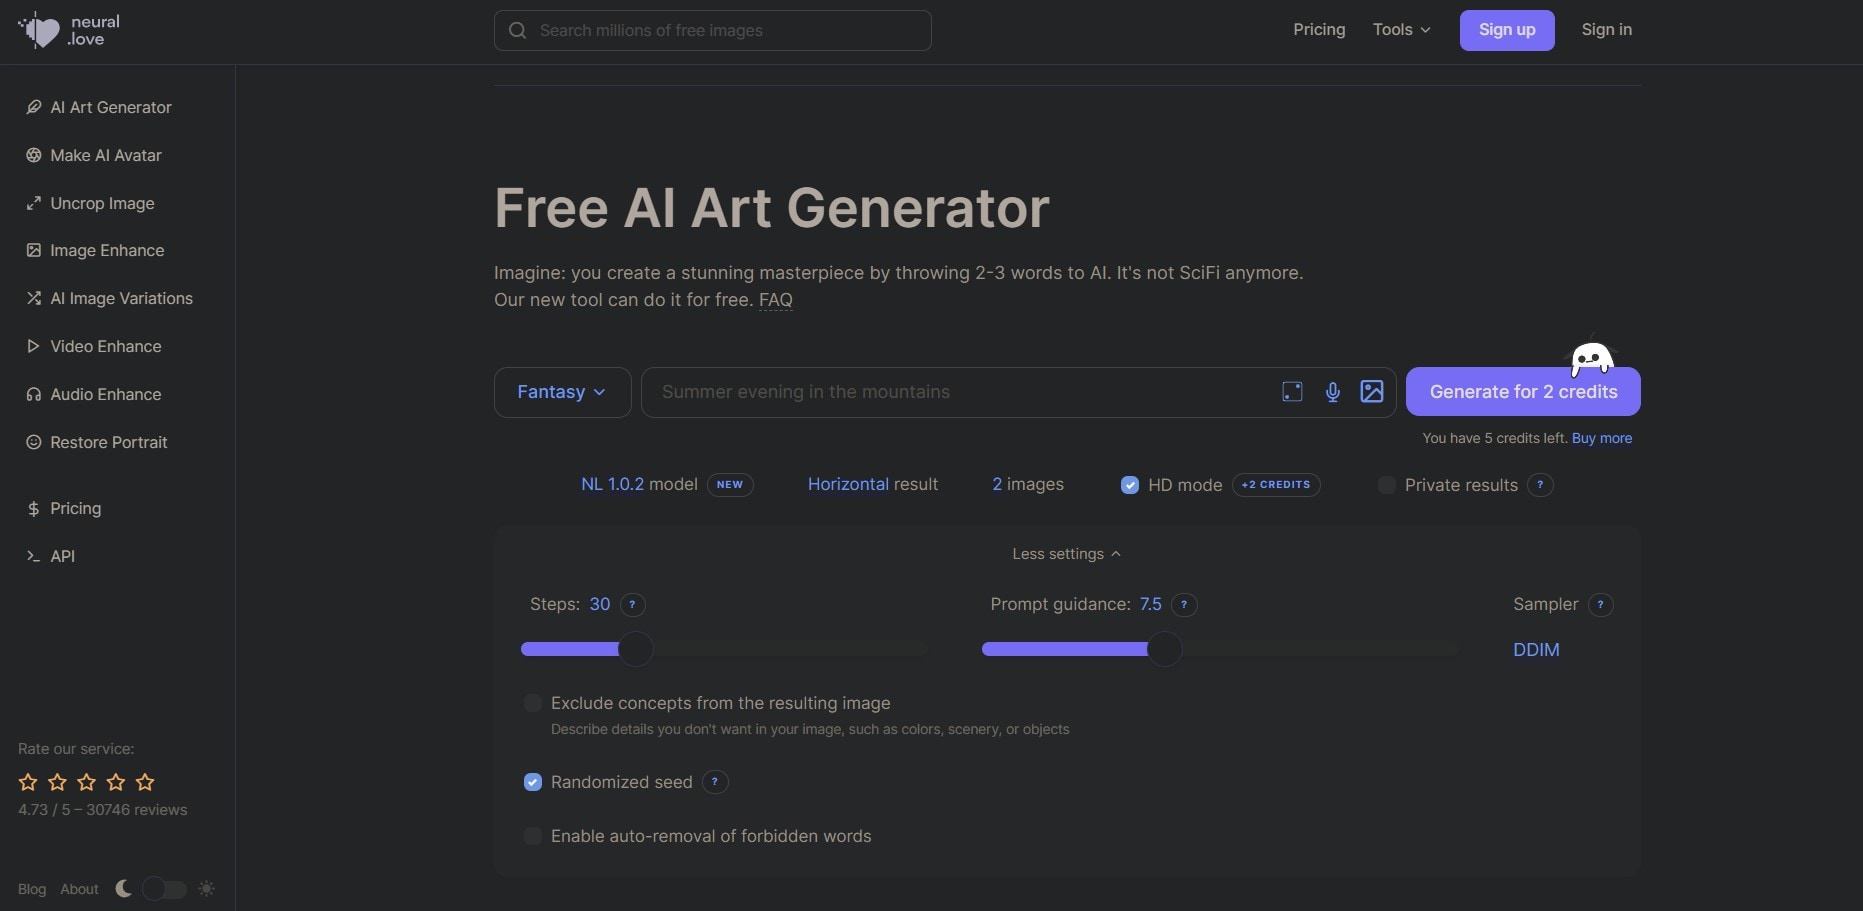 neural love ai art generator interface